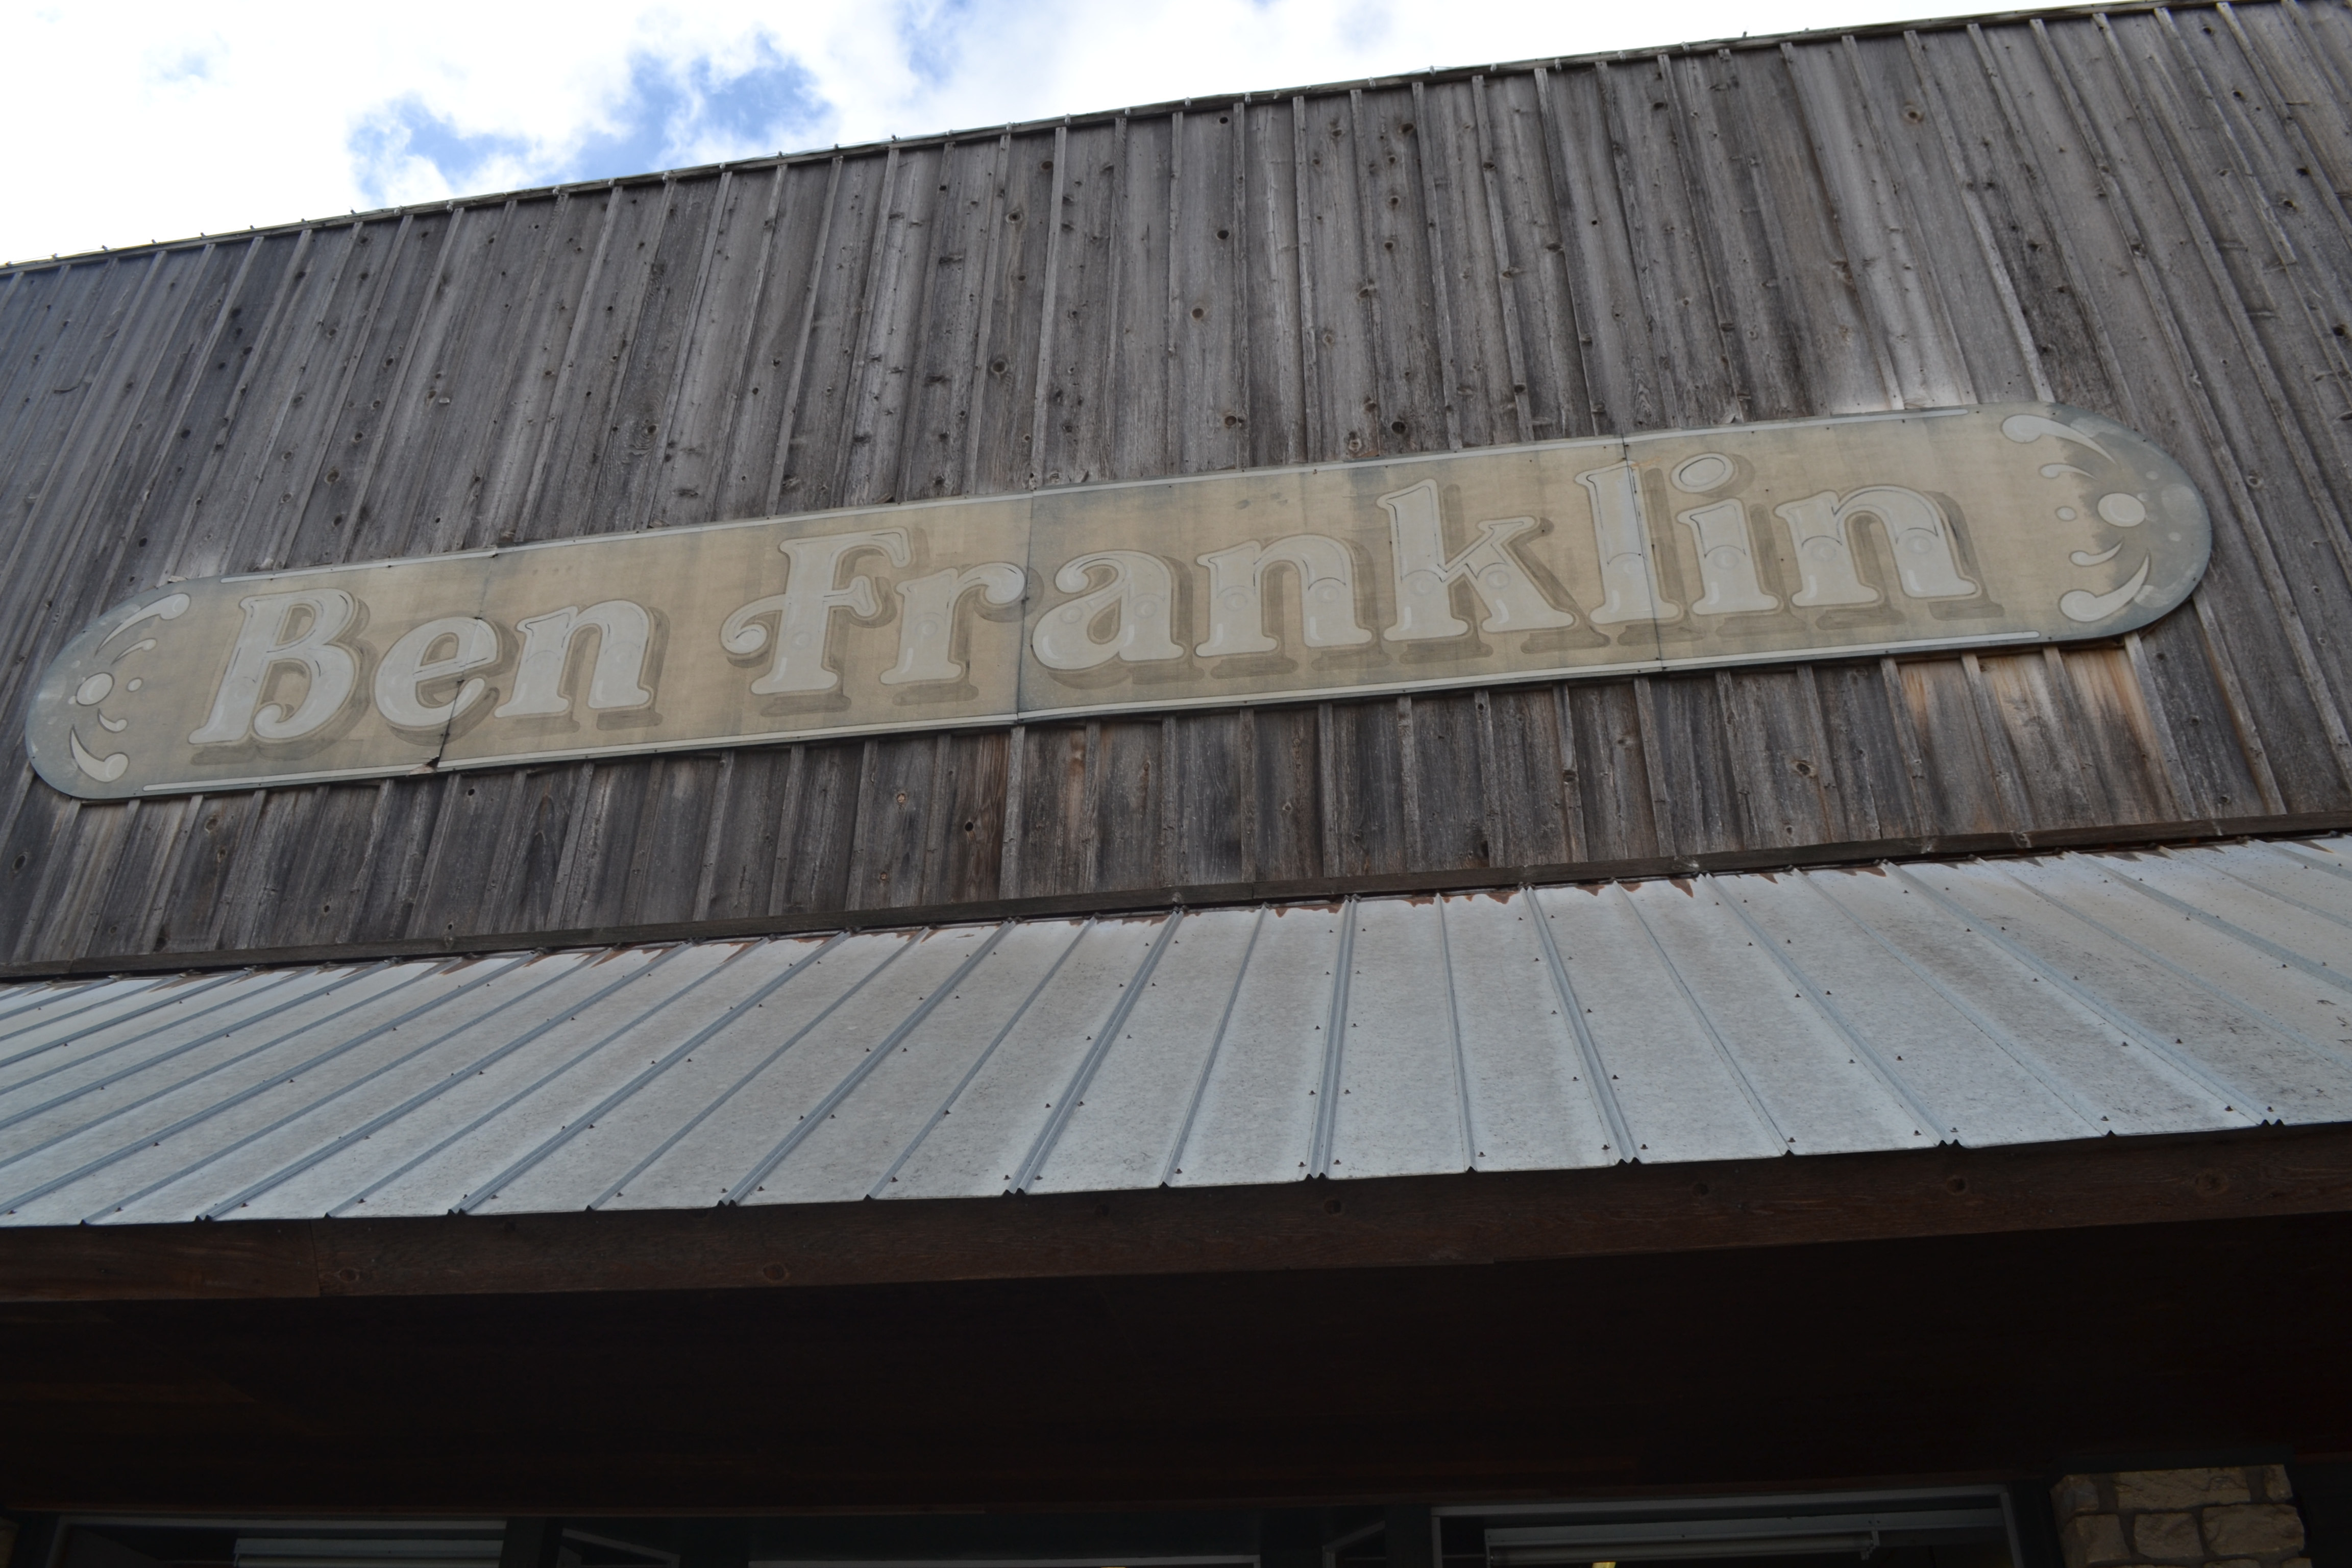 Baking Supplies - Ben Franklin Crafts and Frame Shop